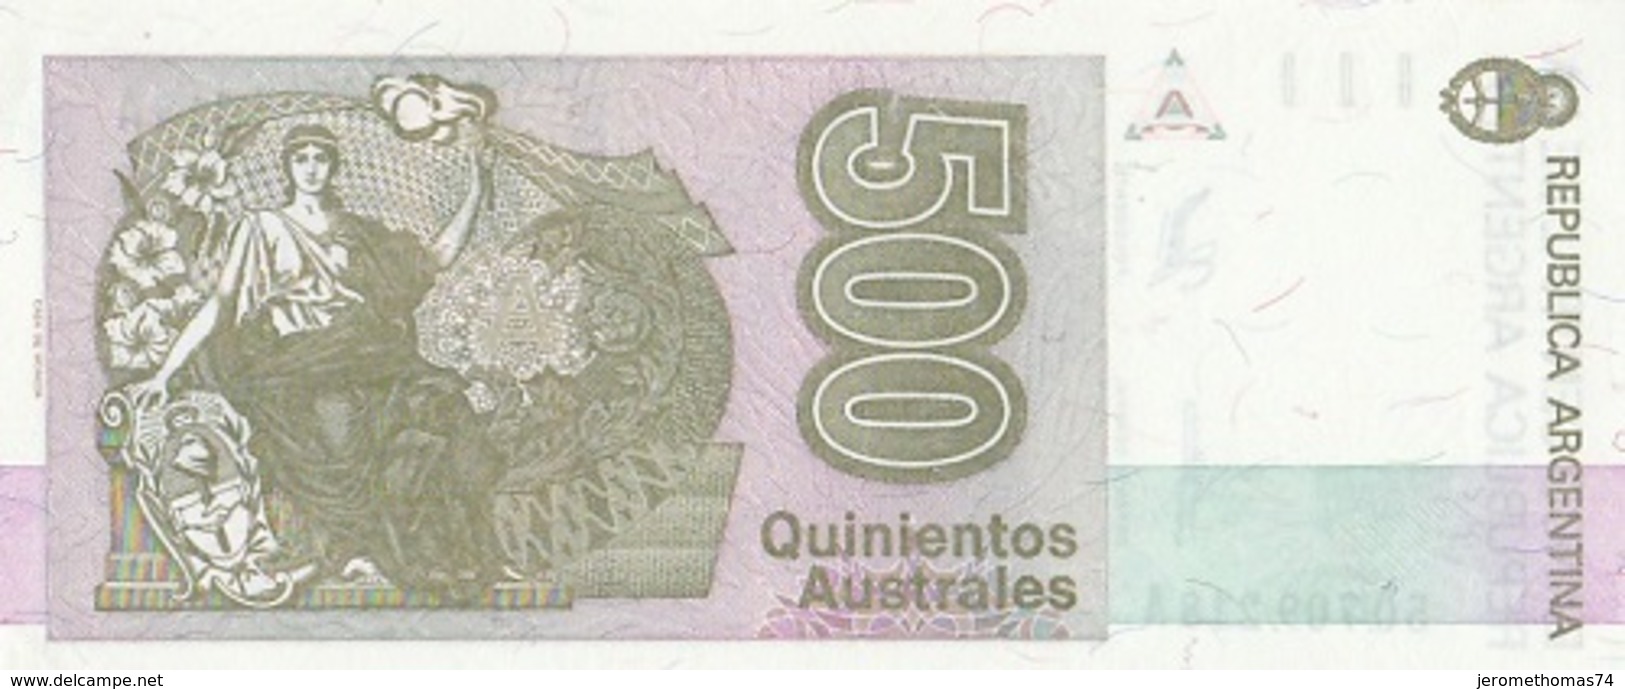 Billet 500 Australes De L'argentine - Argentina